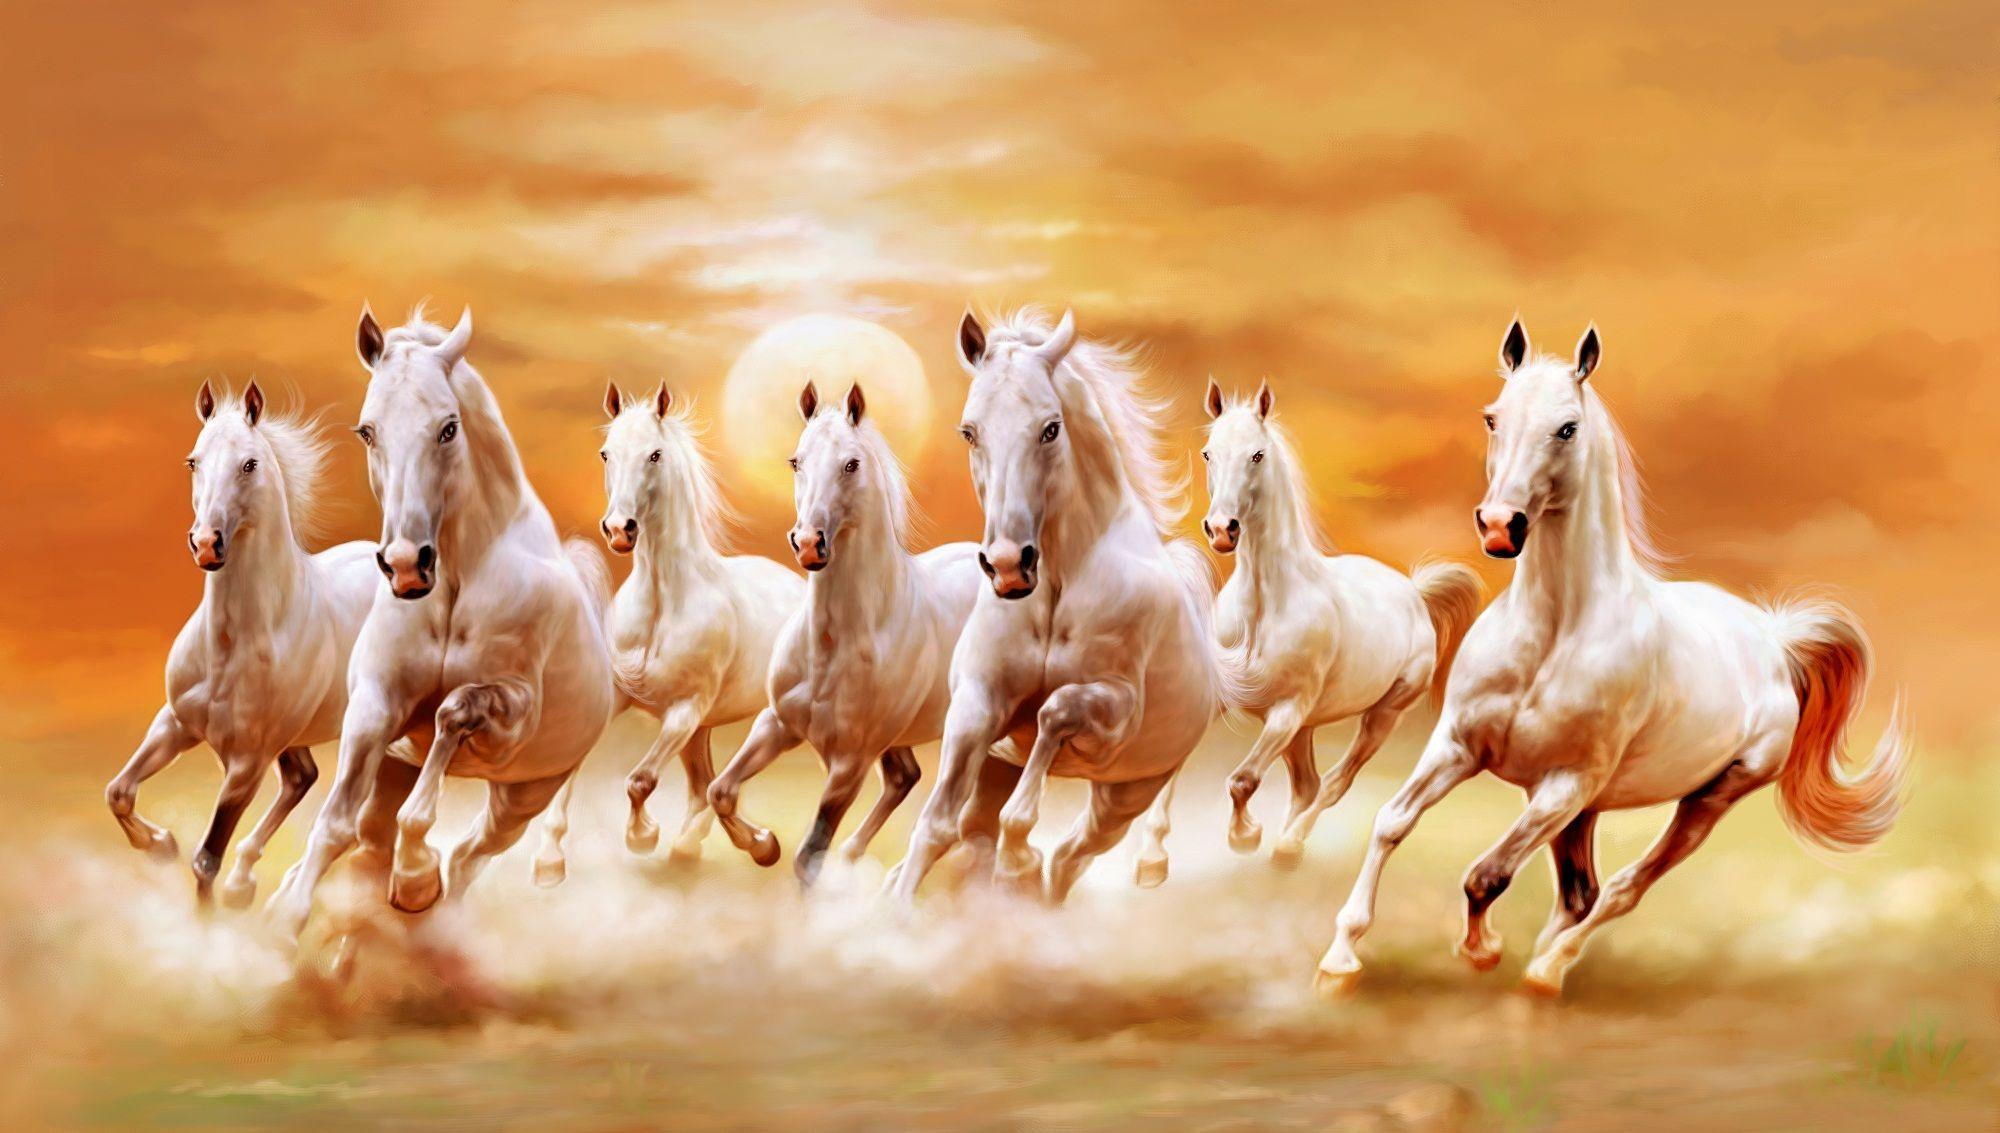 820537 4K, 5K, Horses, Three 3 - Rare Gallery HD Wallpapers